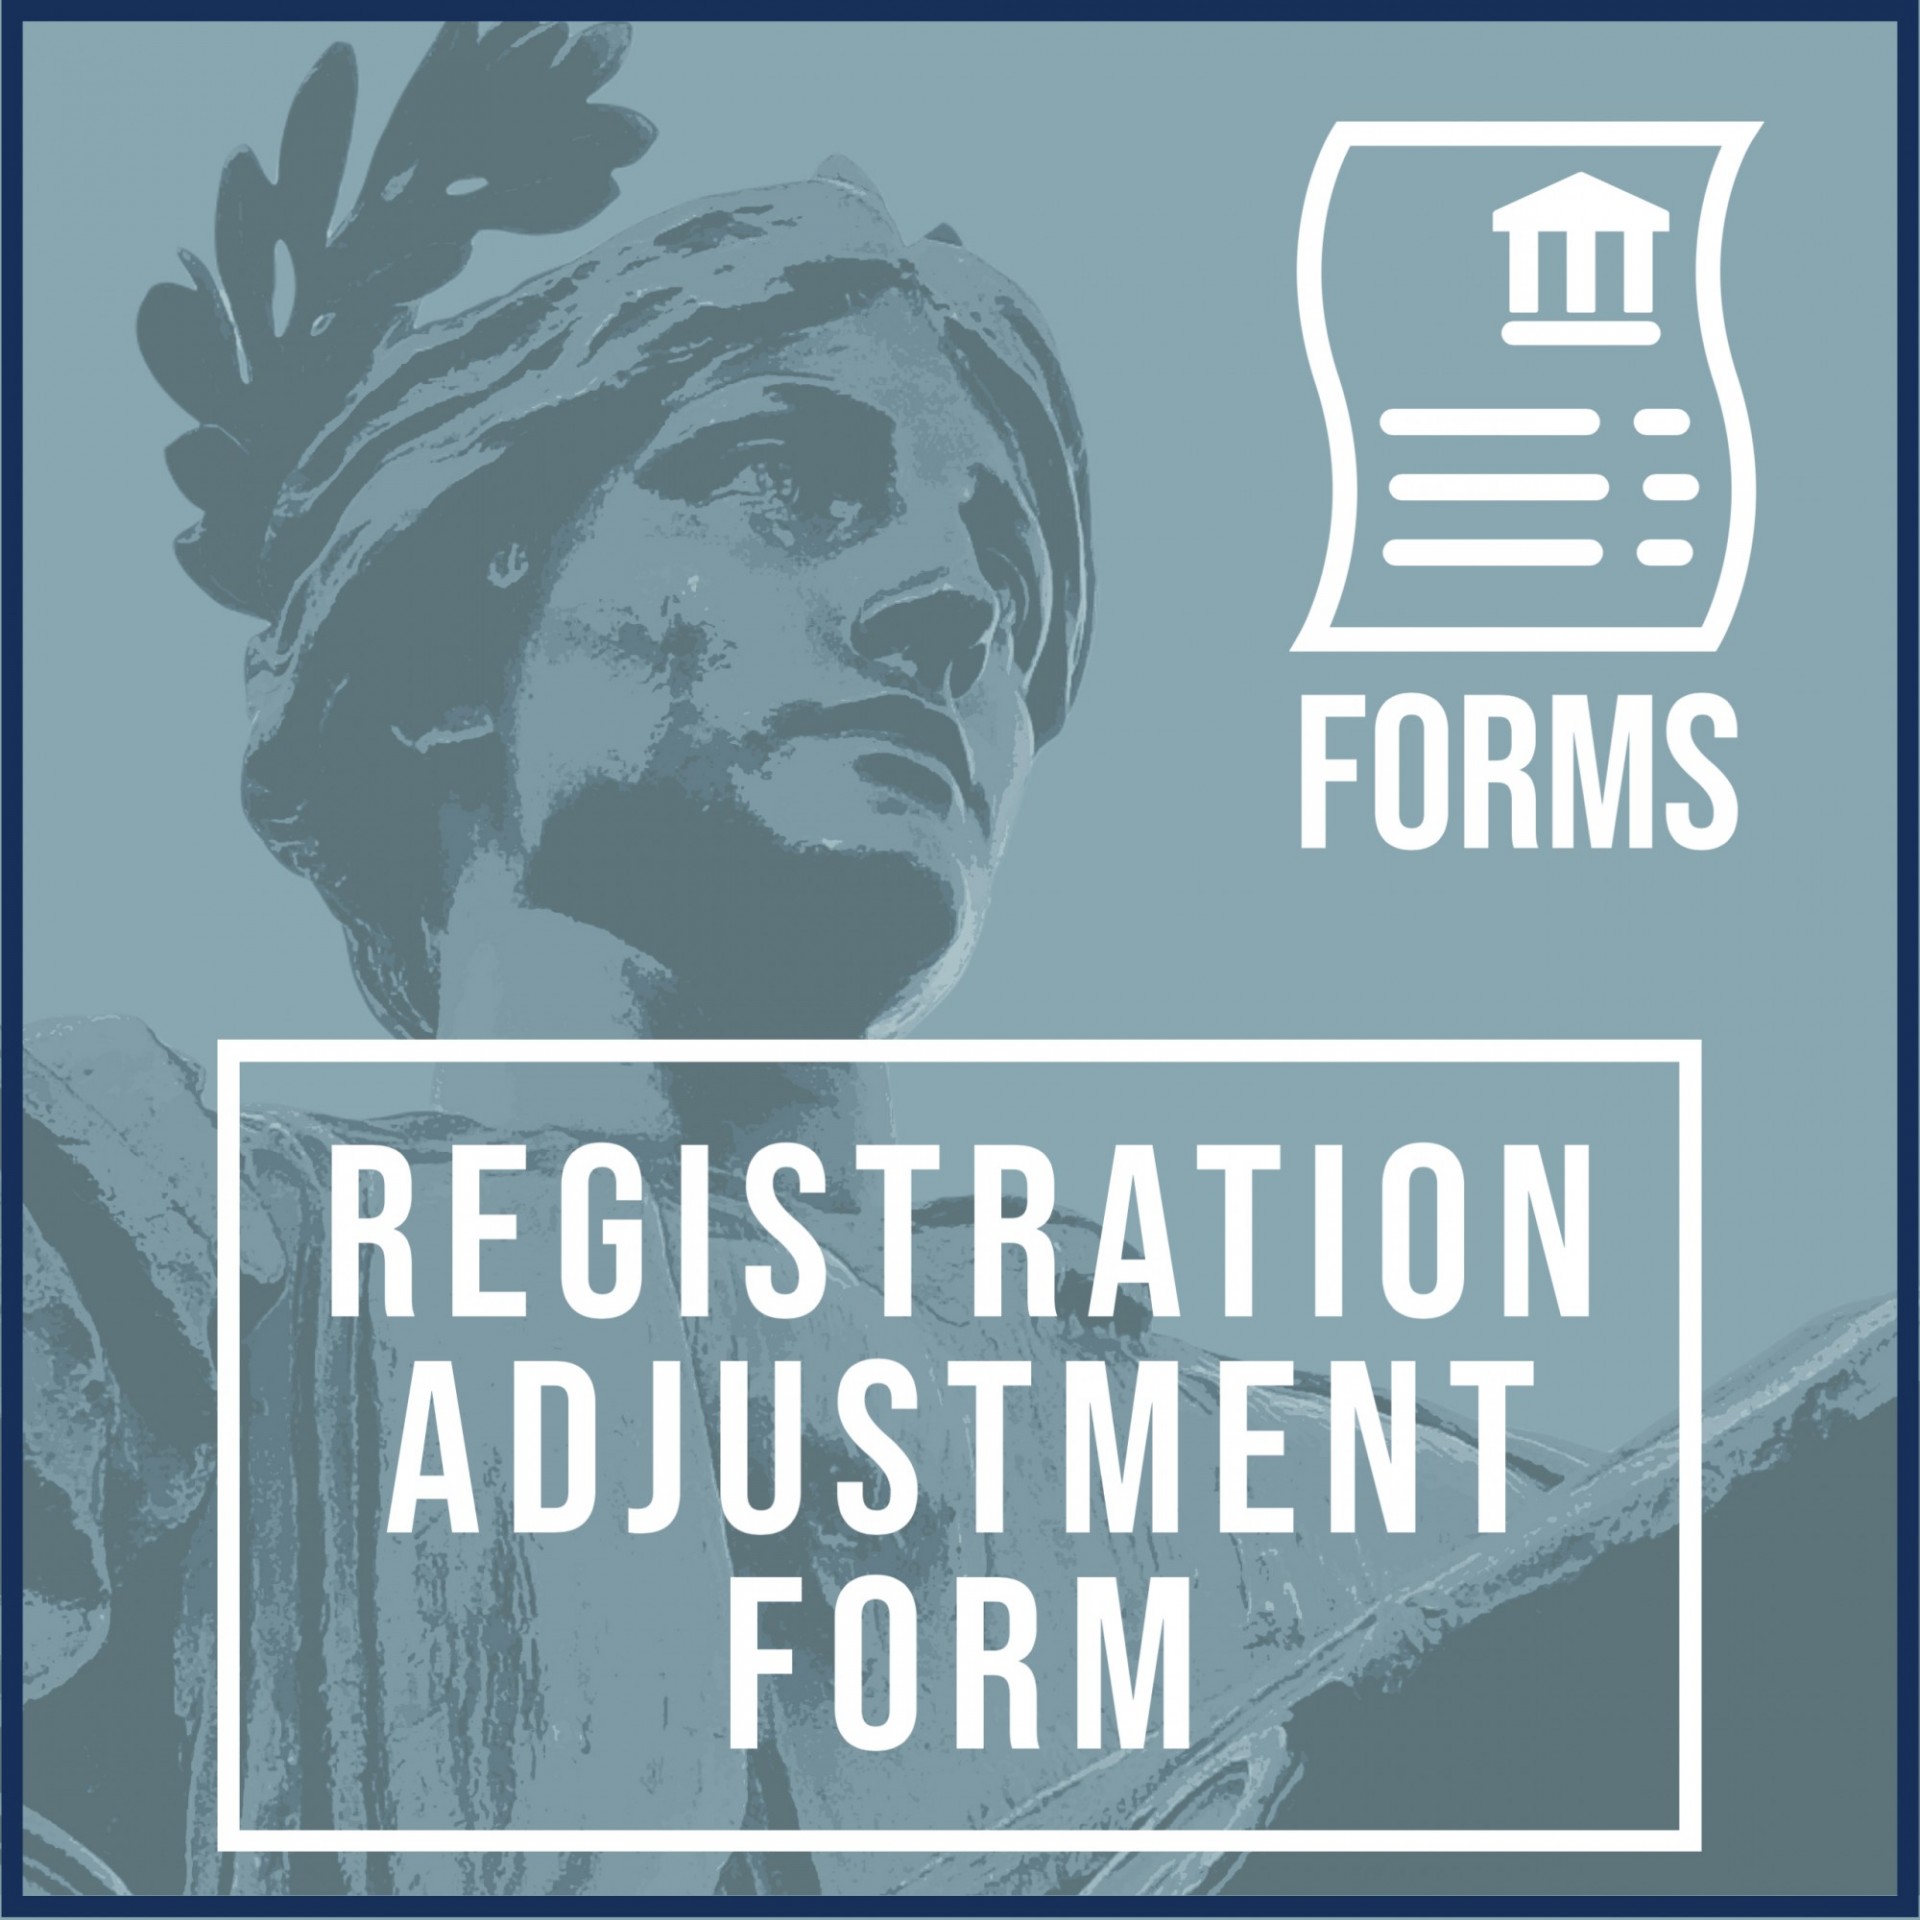 FORMS ICON: REGISTRATION ADJUSTMENT